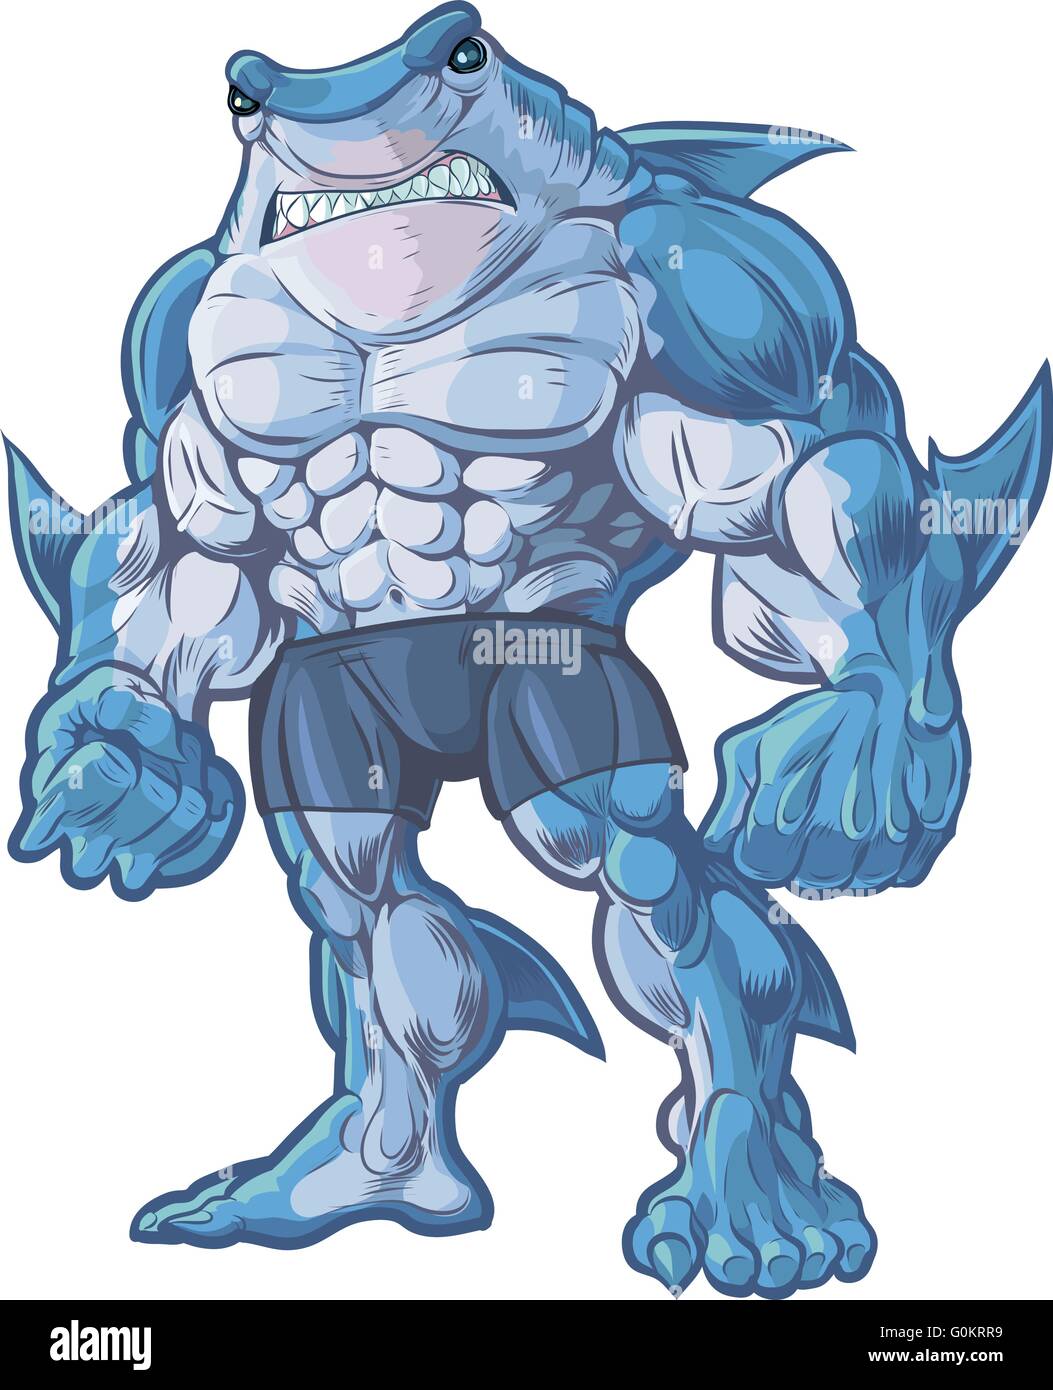 Vector cartoon clip art illustration of a muscular, tough, and mean looking anthropomorphic half shark, half man hybrid creature Stock Vector